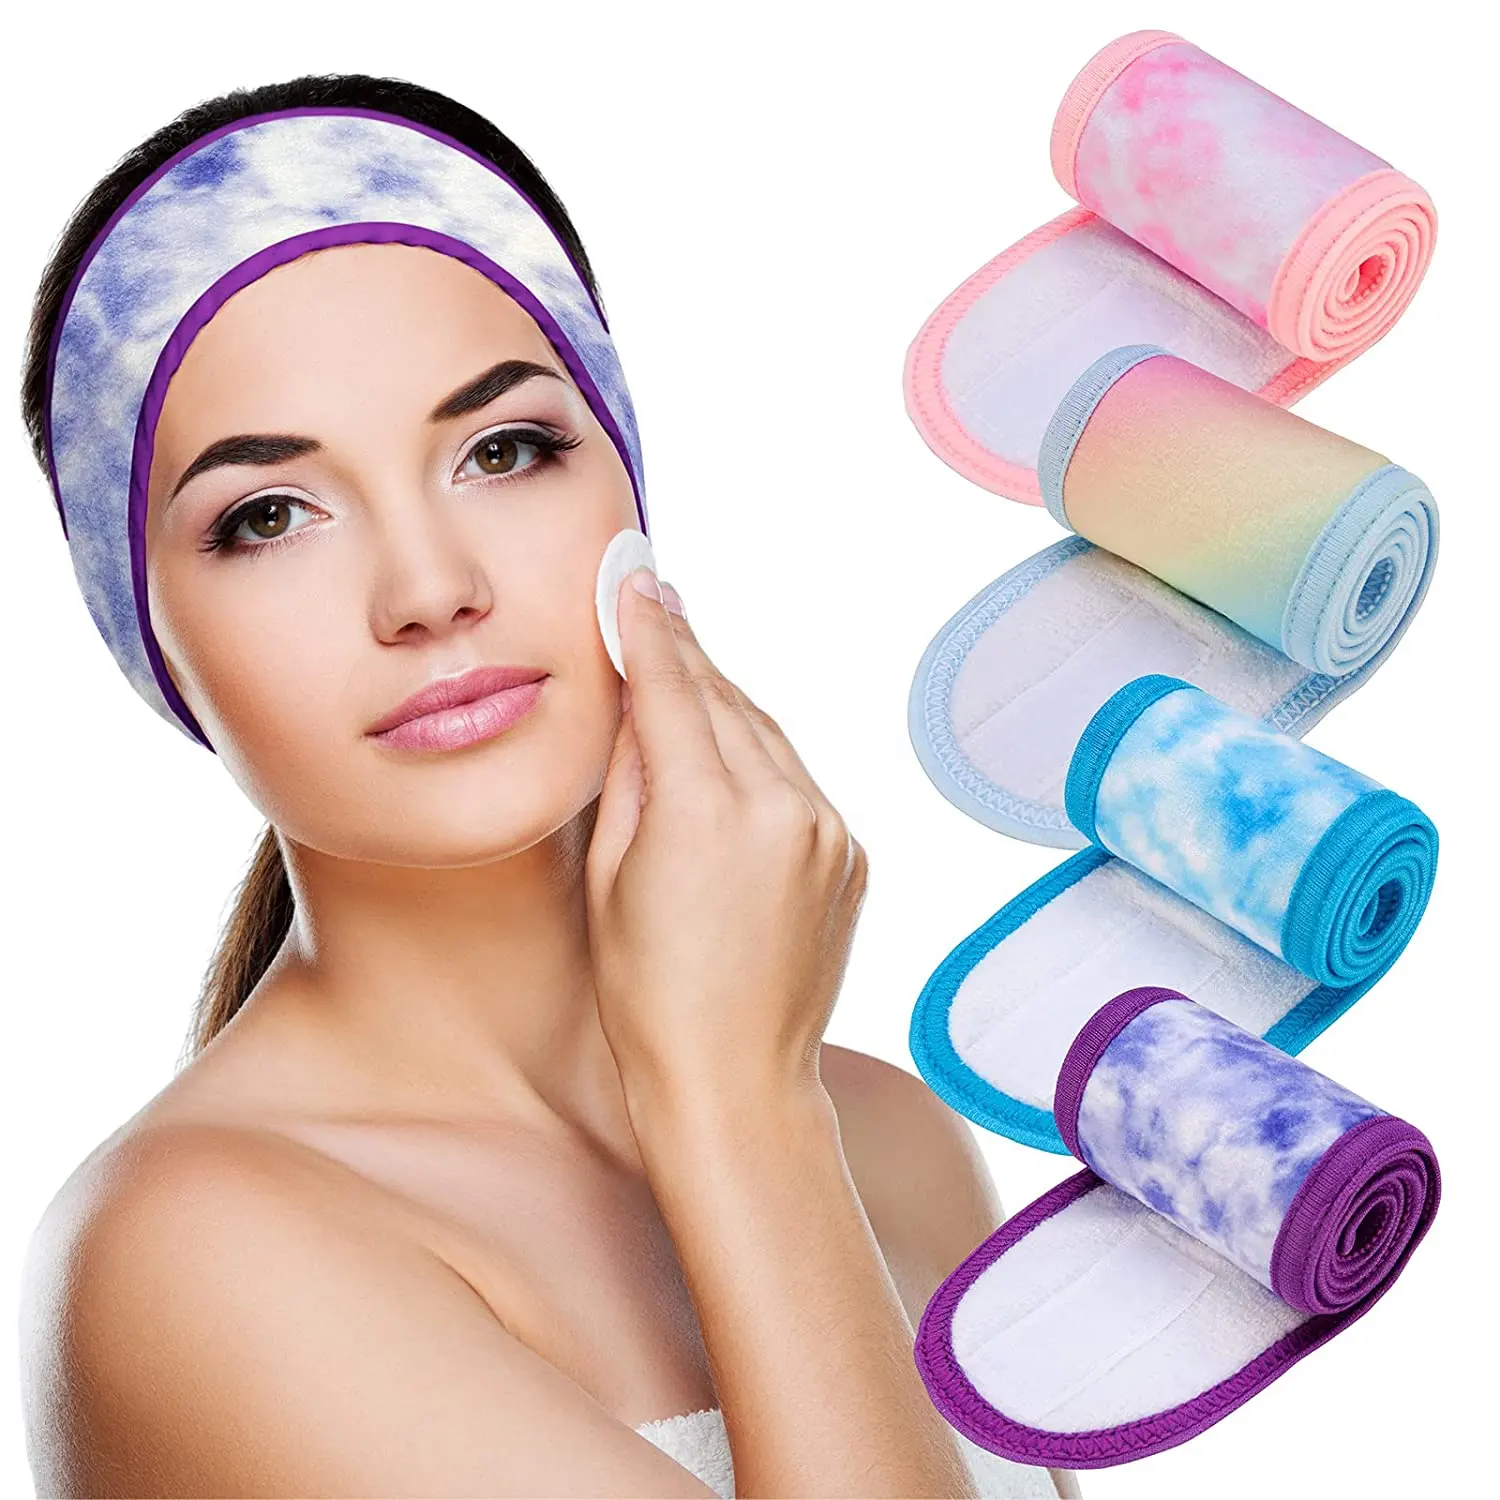 Terry Cloth head band for washing face Skincare vinchas de maquillaje Face Washing Shower Facial Mask Yoga Spa Facial Headband